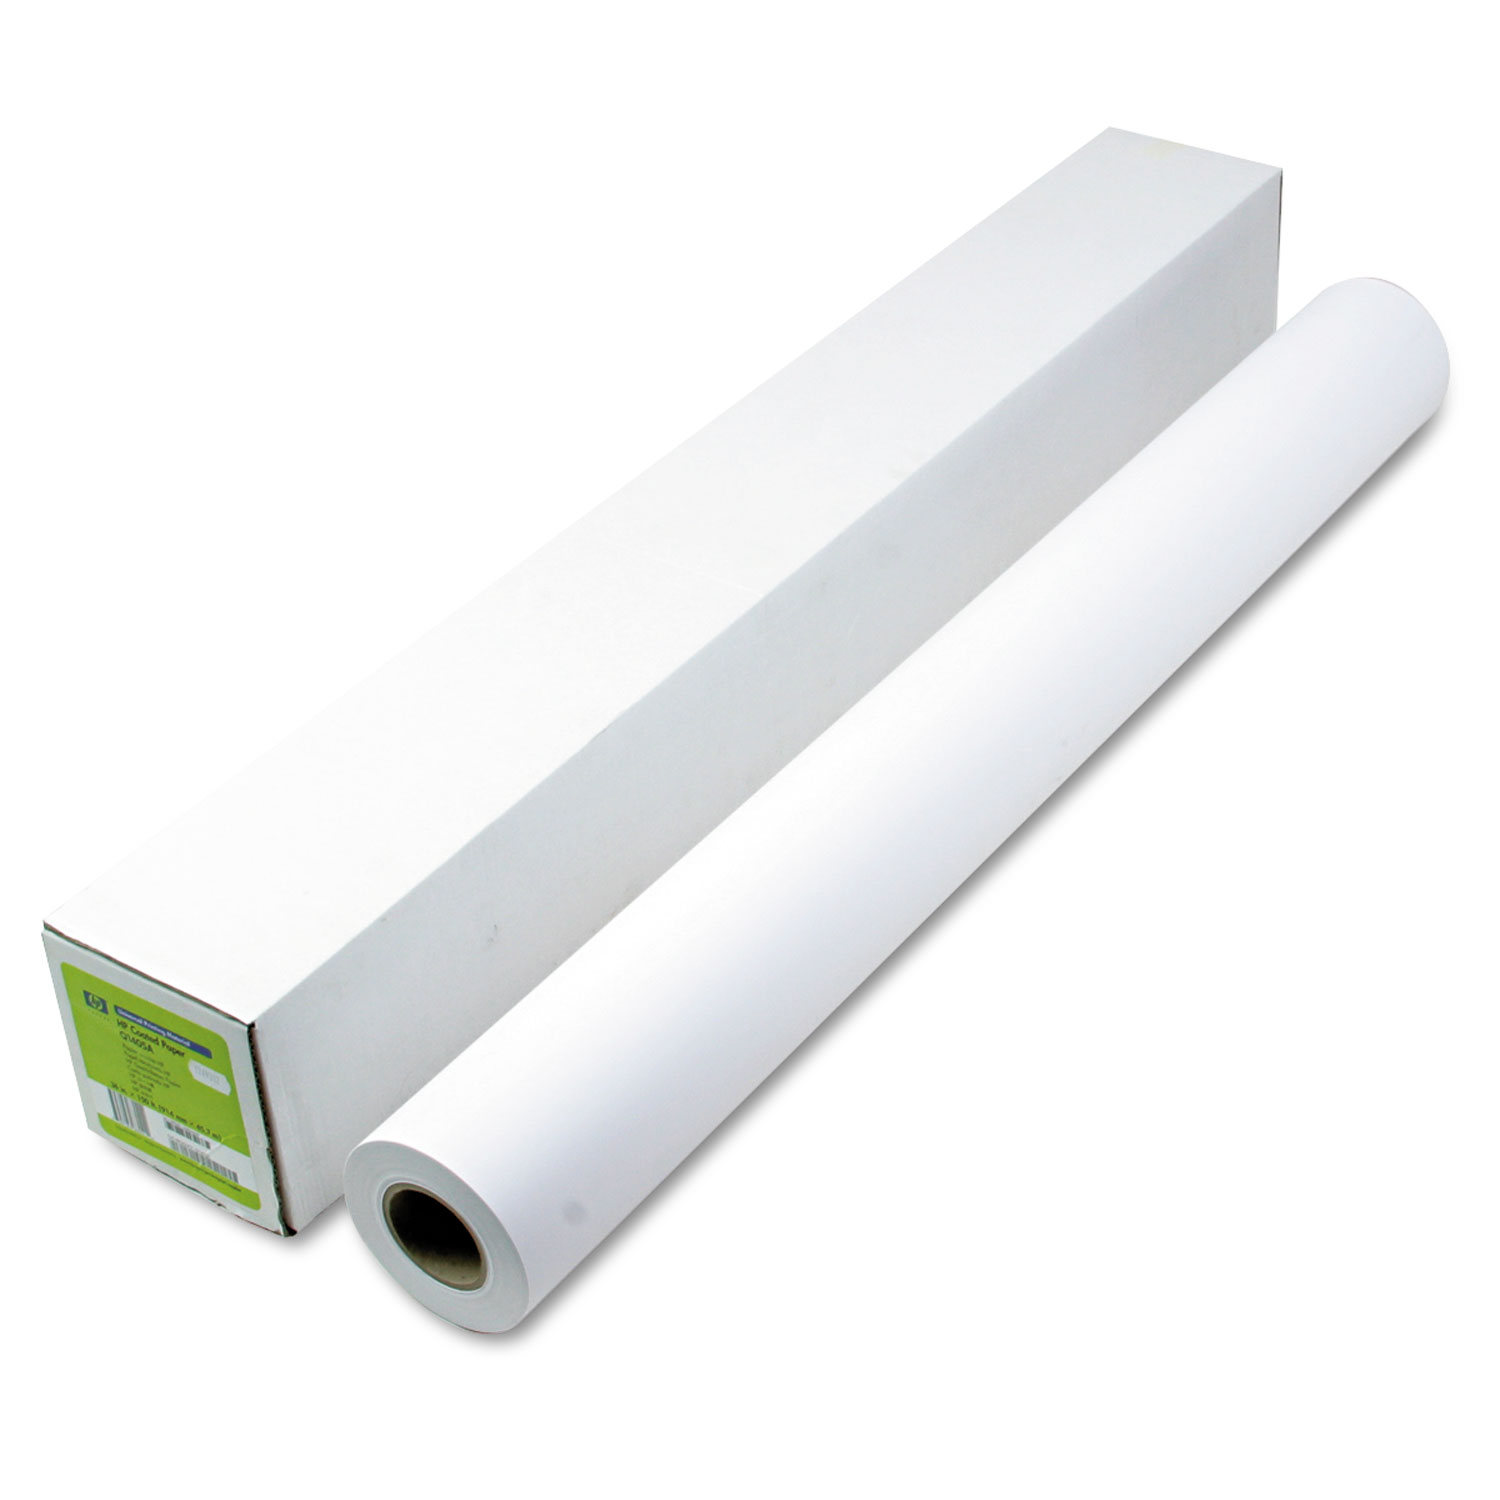  HP Q1405B DesignJet Inkjet Large Format Paper, 4.9 mil, 36 x 150 ft, Coated White (HEWQ1405B) 